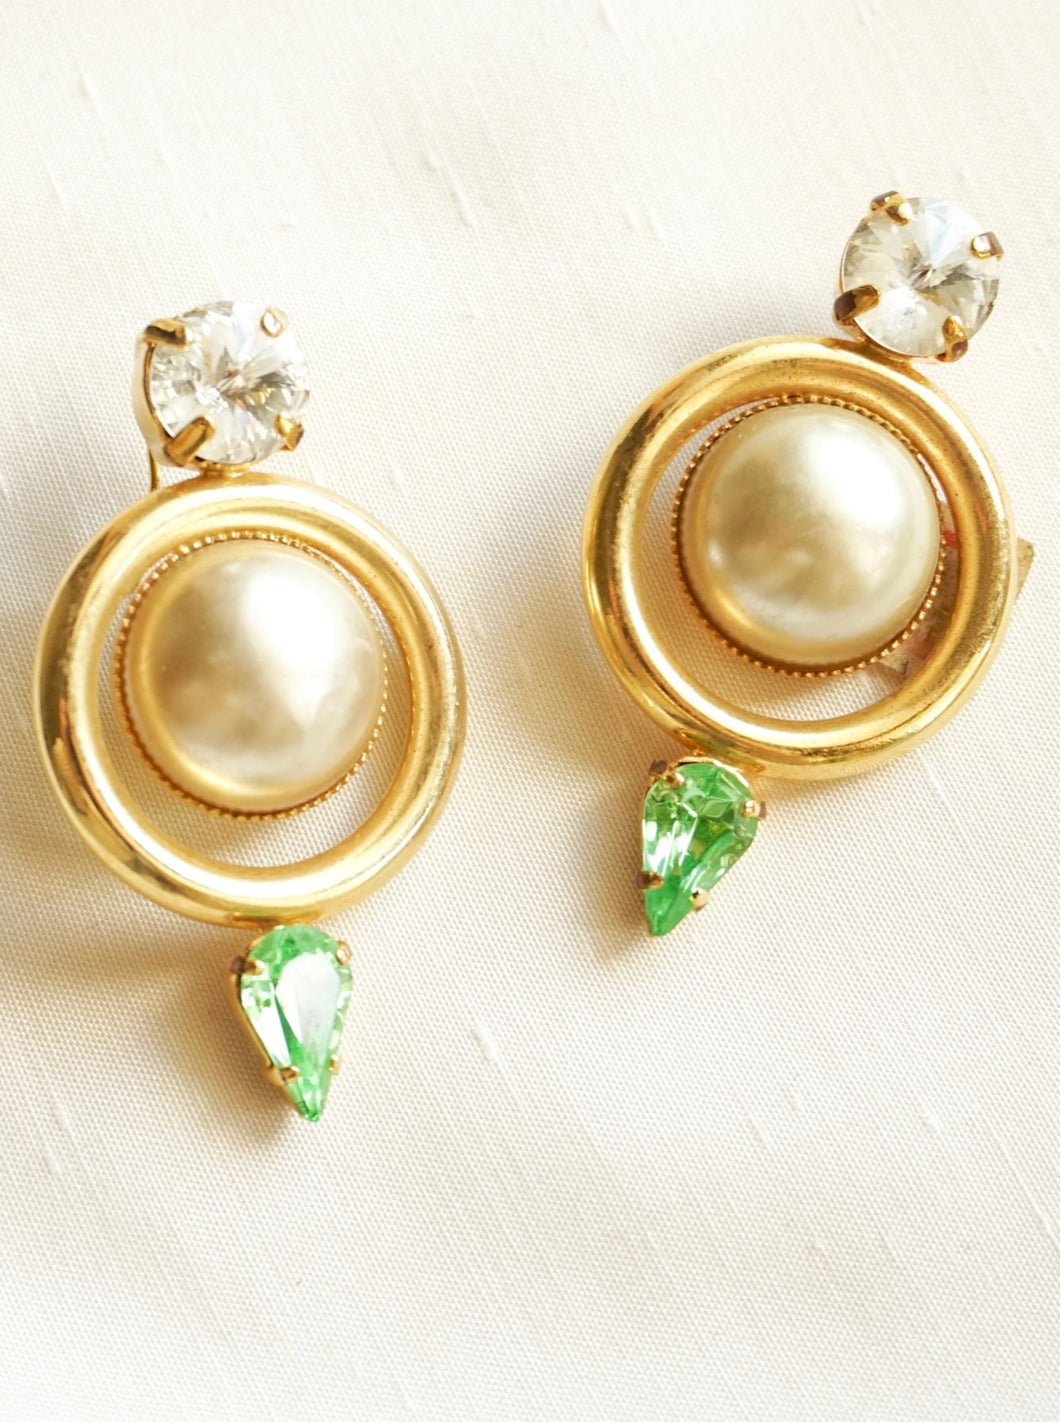 Baroque earrings with green rhinestones